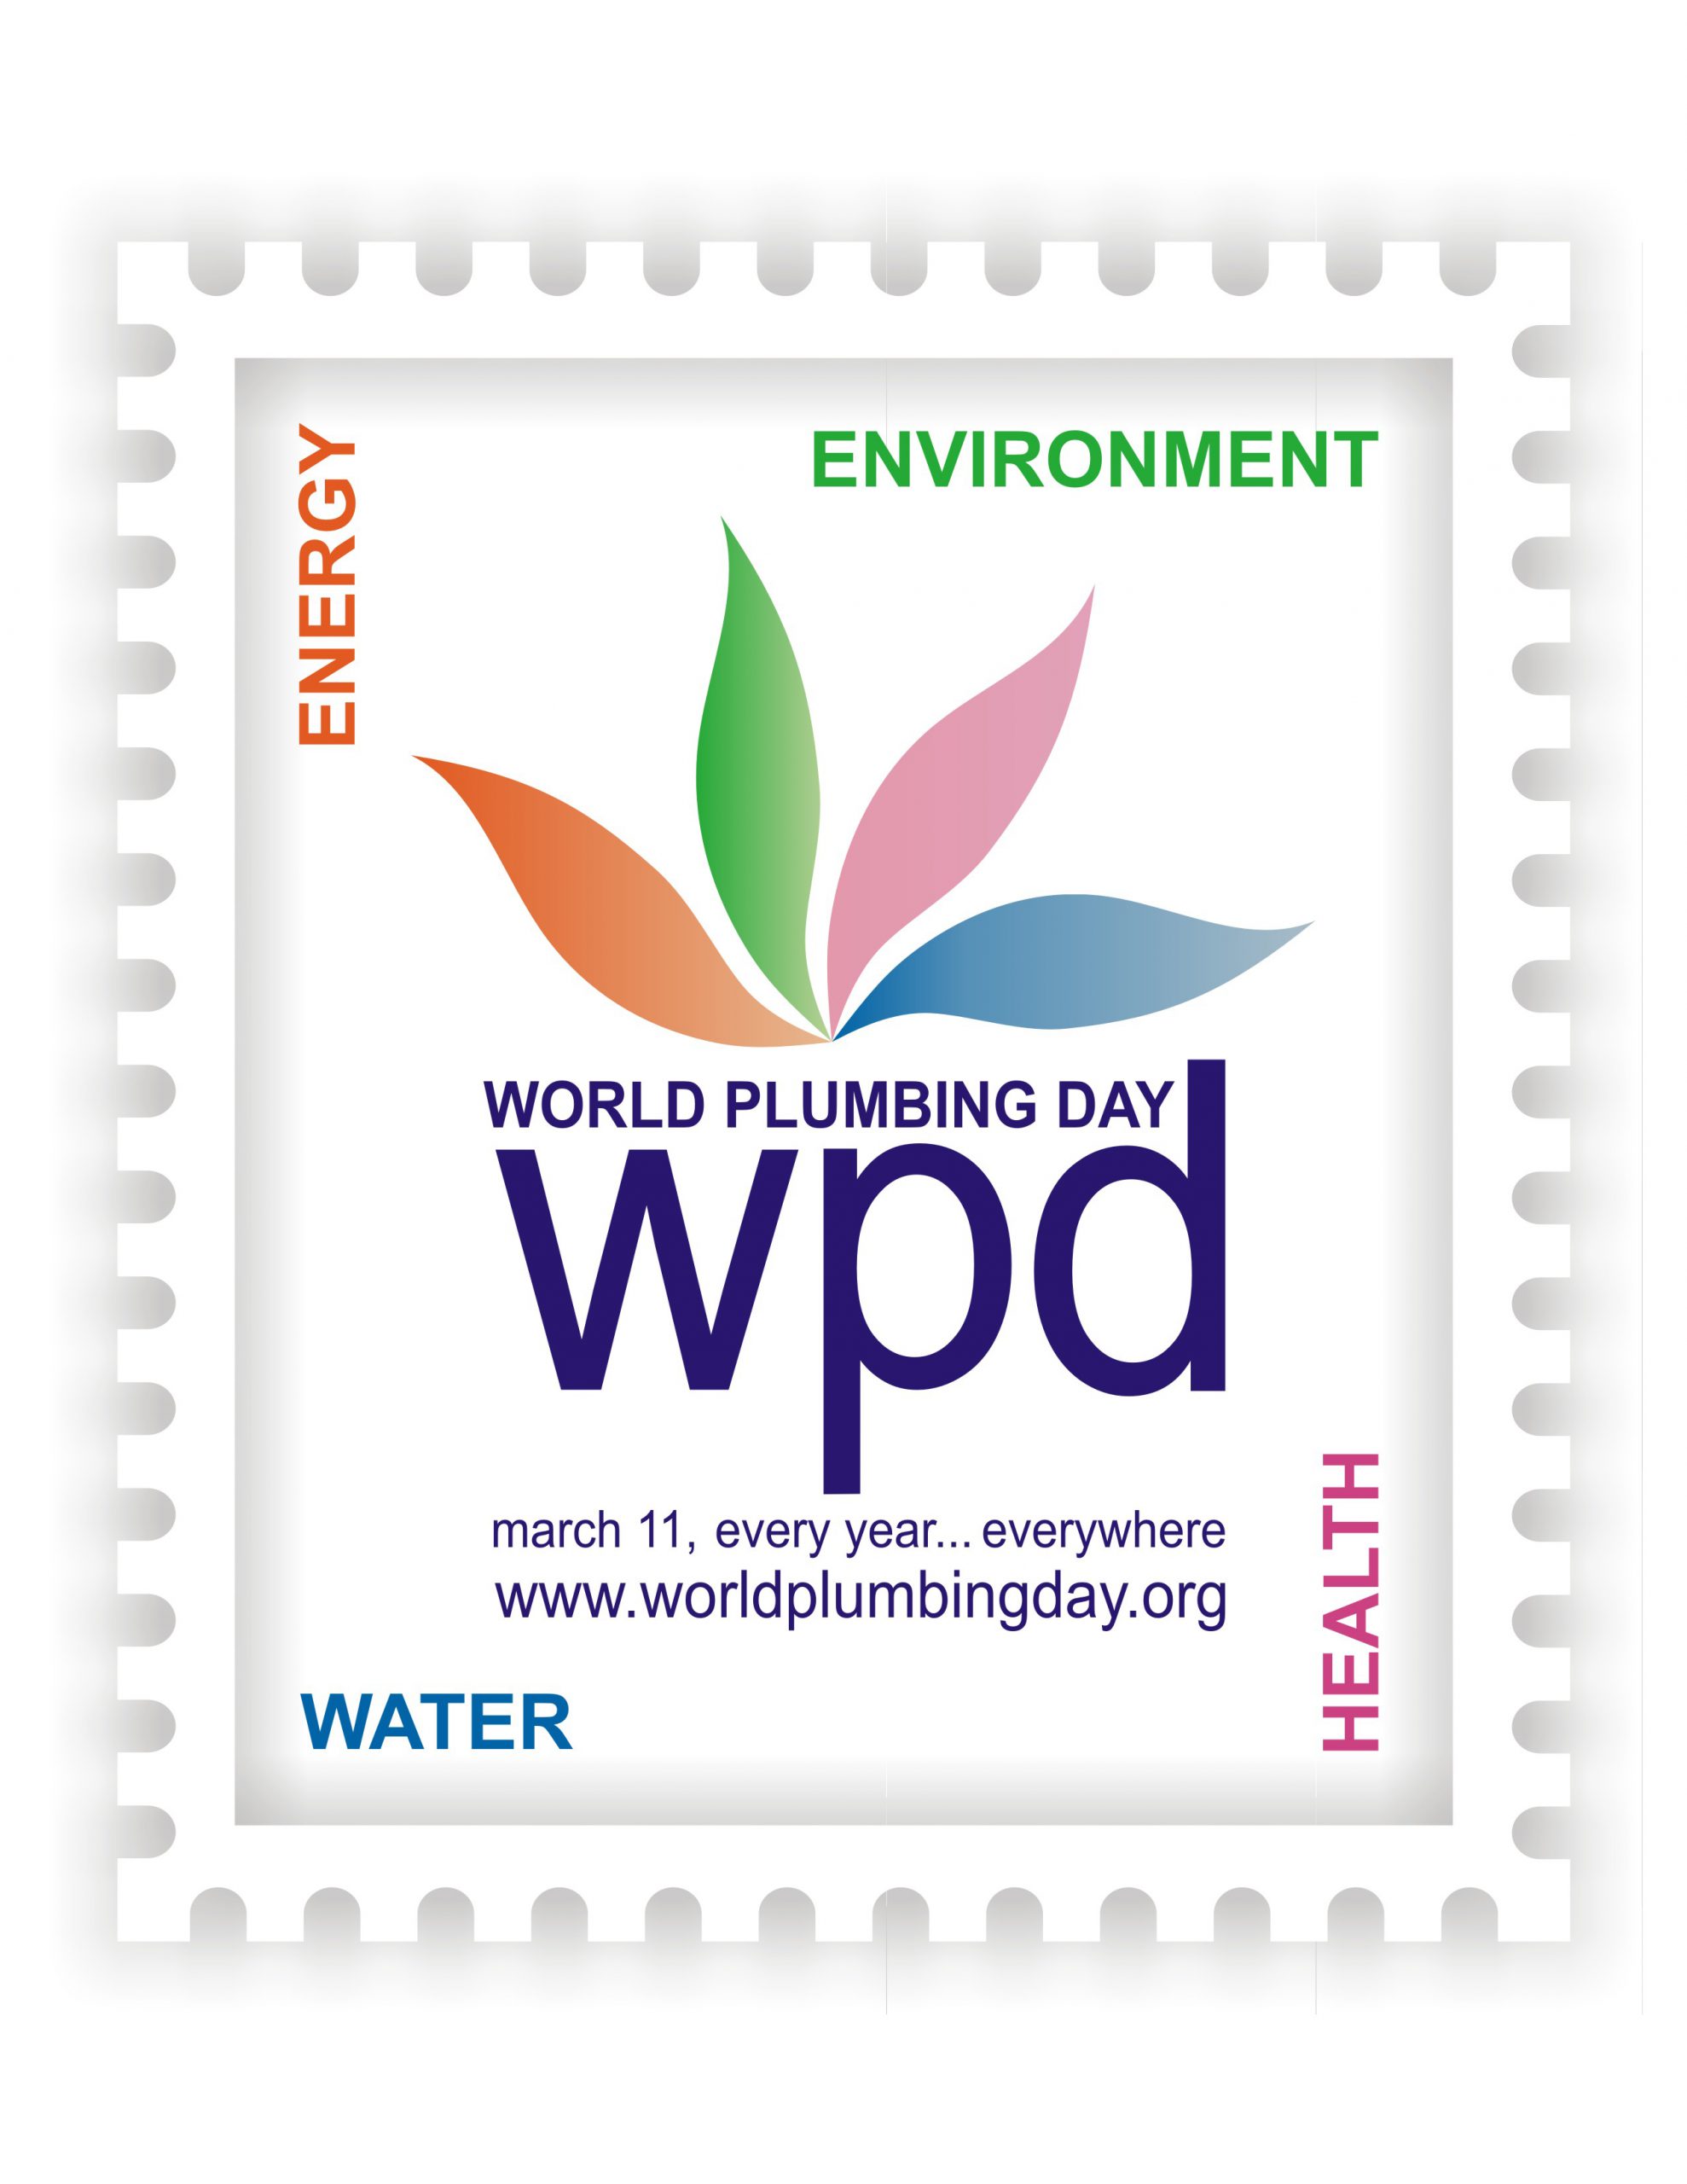 World Plumbing Day 2021